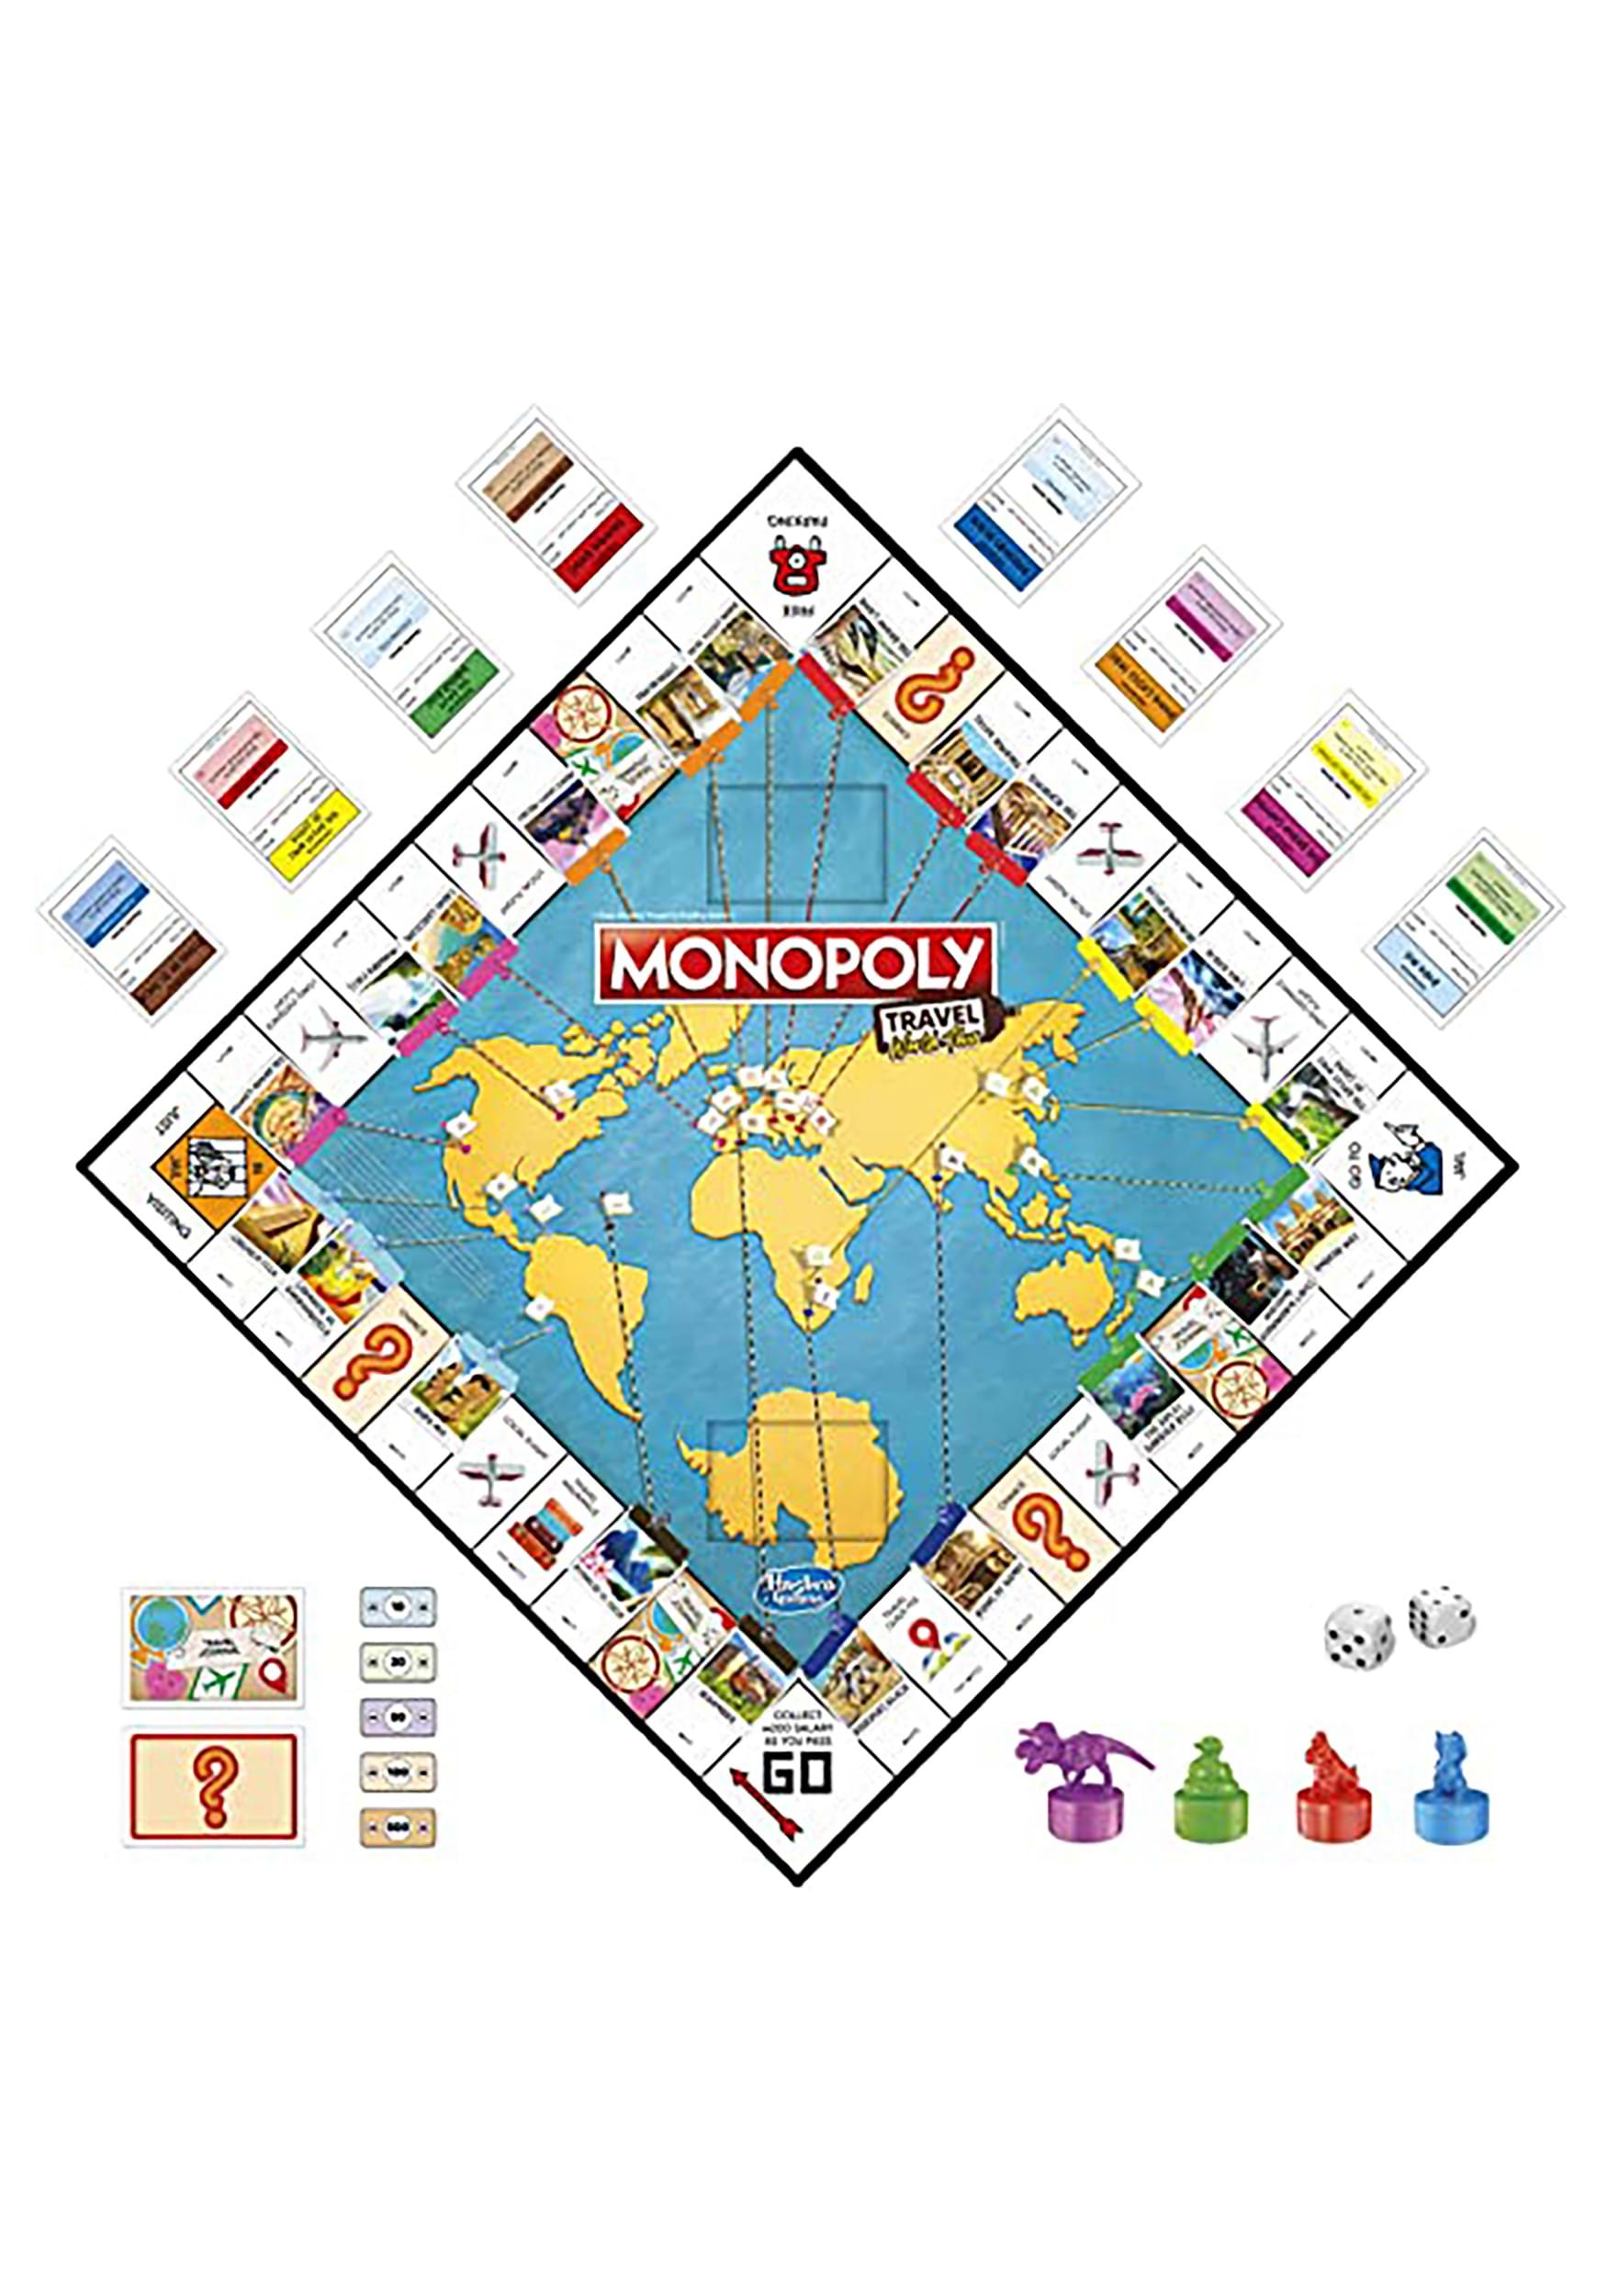 monopoly travel world tour rules pdf